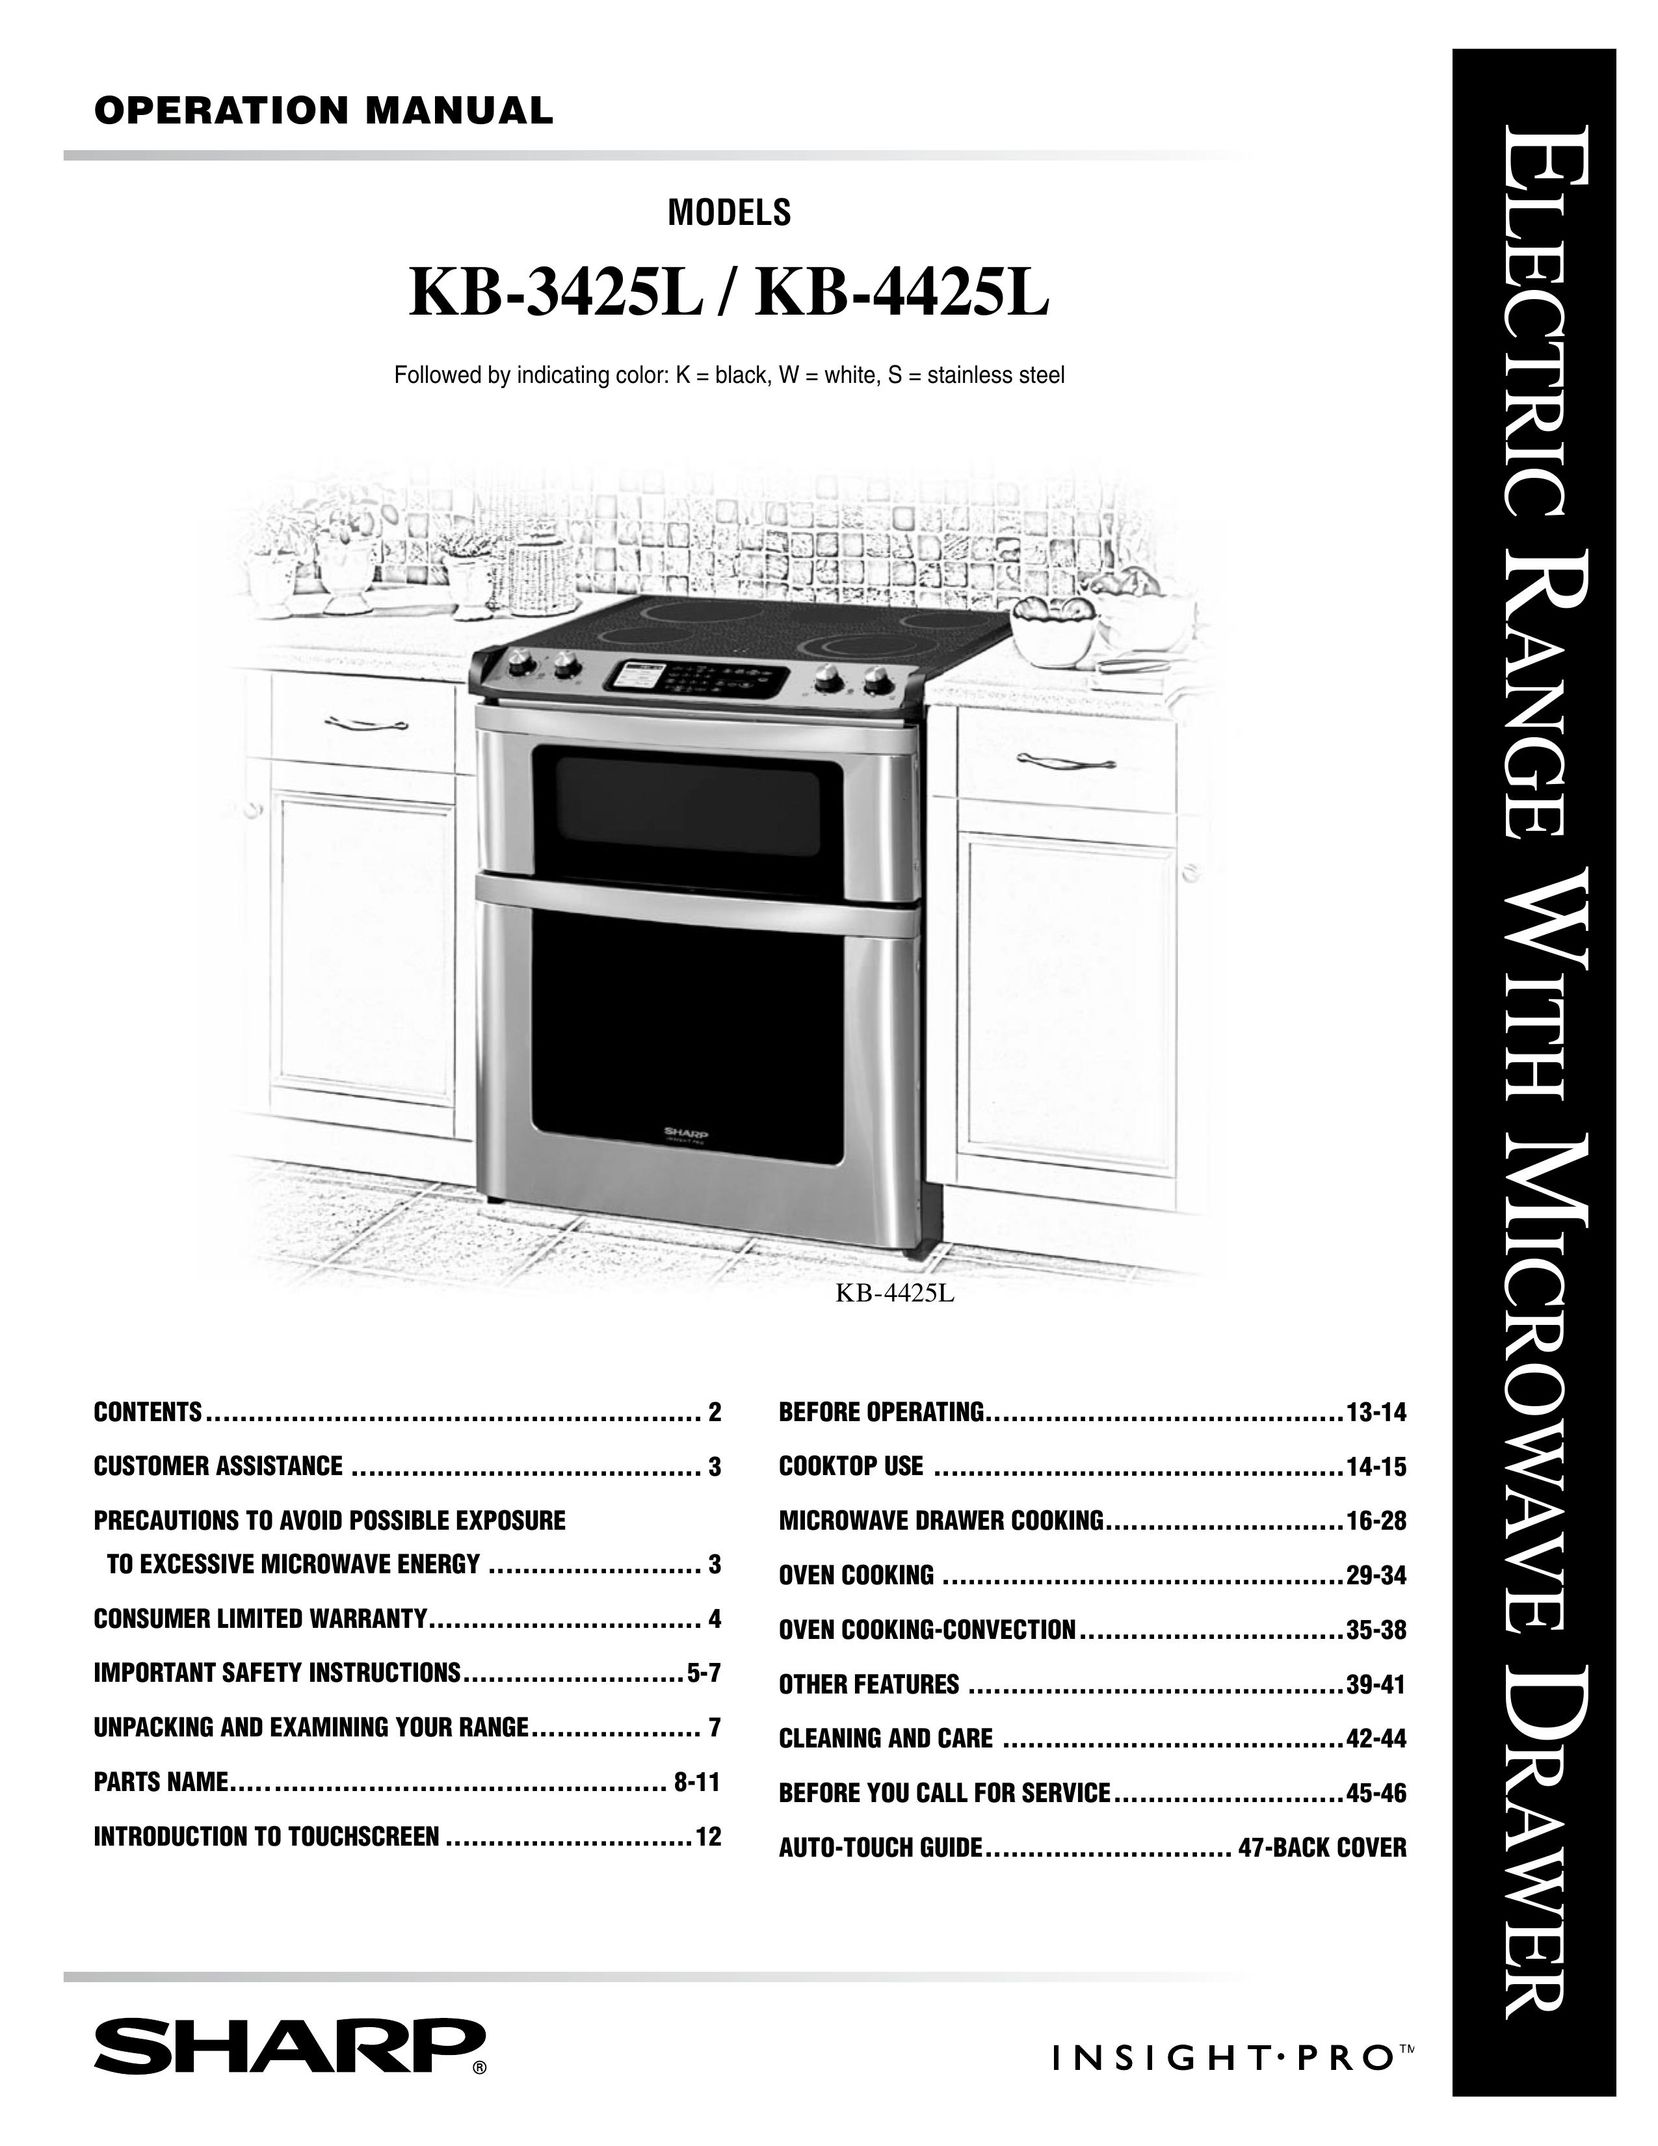 Sharp KB-3425L Microwave Oven User Manual